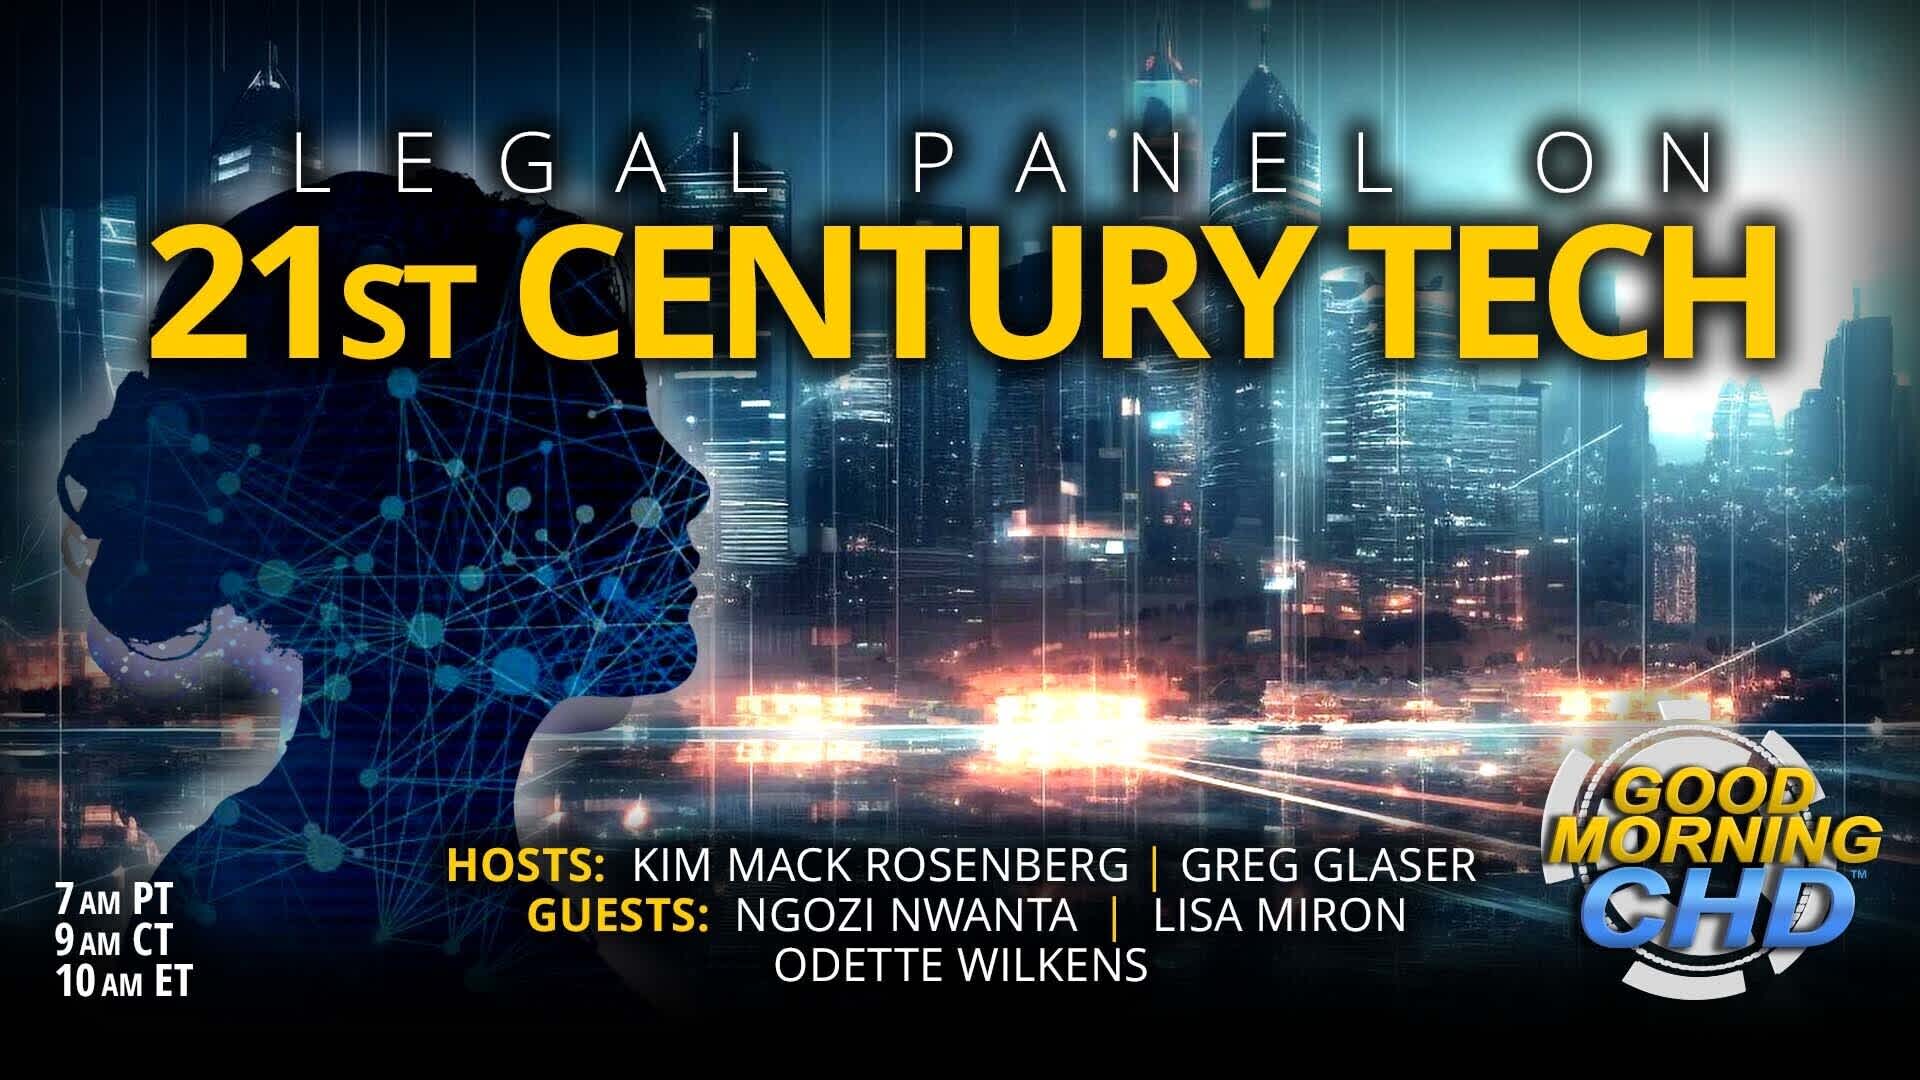 21st Century Tech: A Legal Panel Discussion